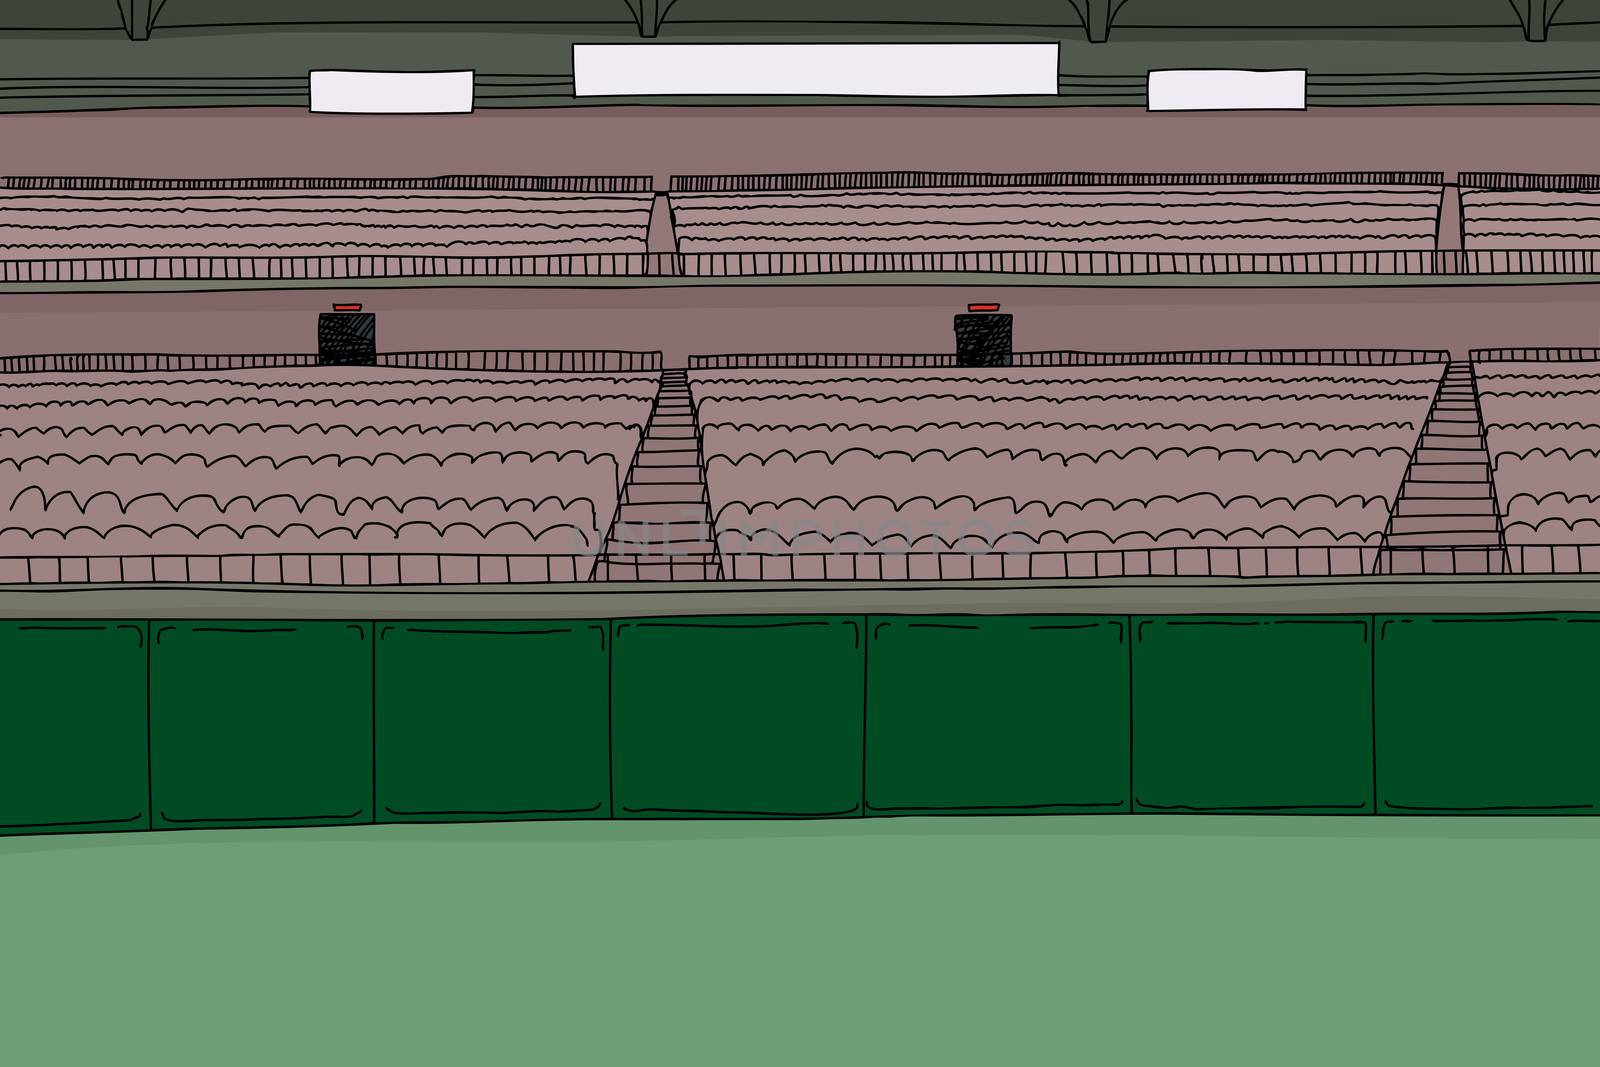 Large cartoon illustration of stadium with blank scoreboard signs